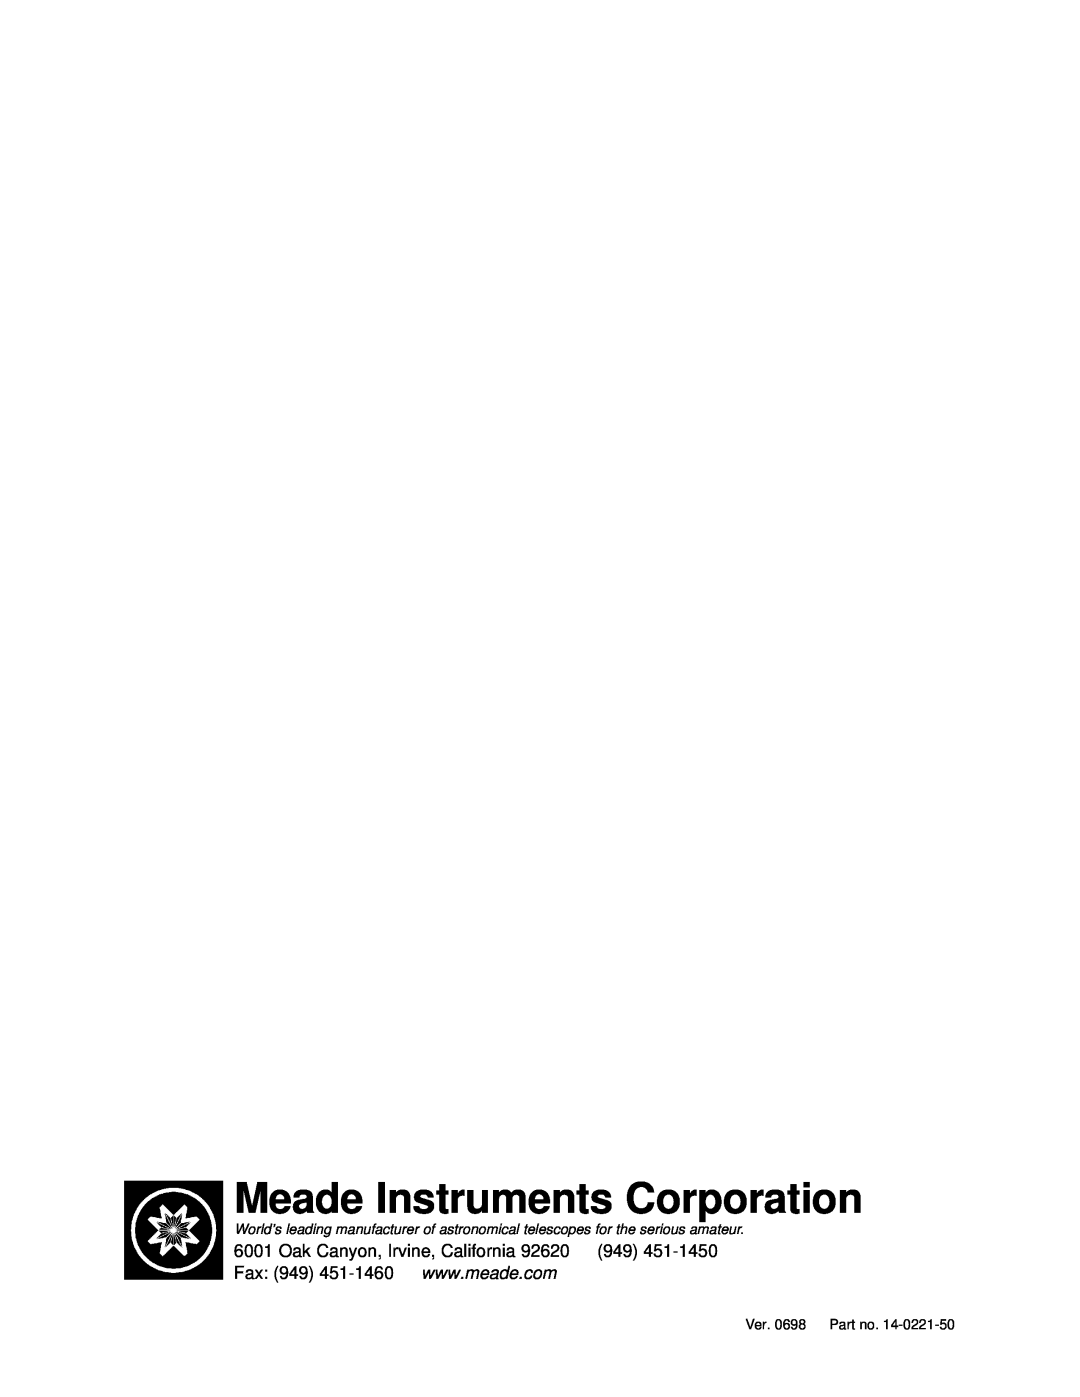 Meade 50 AZ-T instruction manual Meade Instruments Corporation, Ver. 0698 Part no 